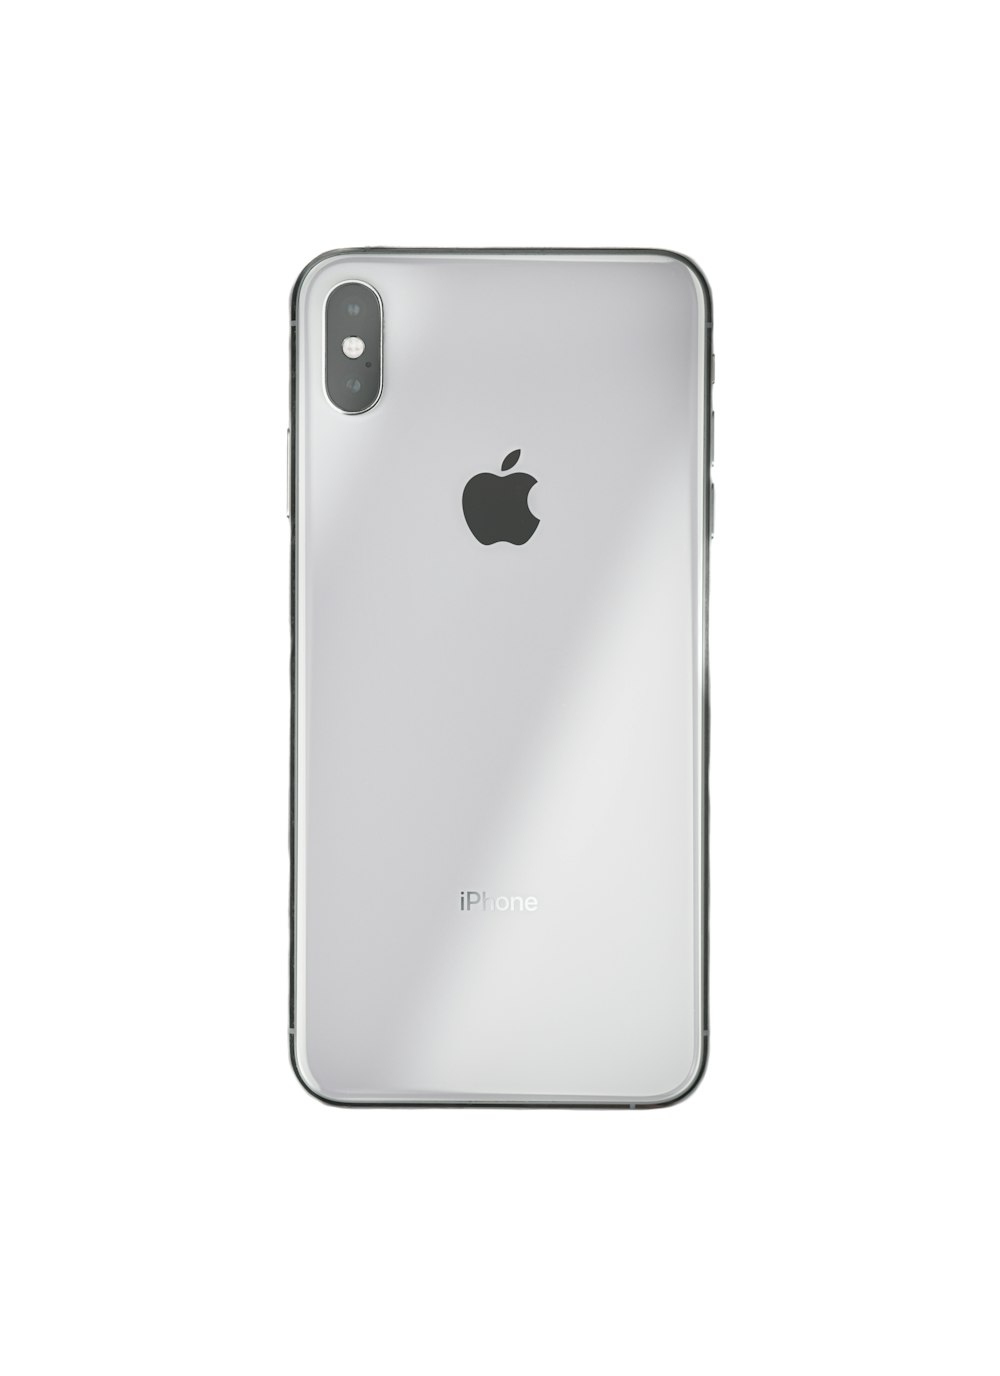 black iphone 7 plus on white background